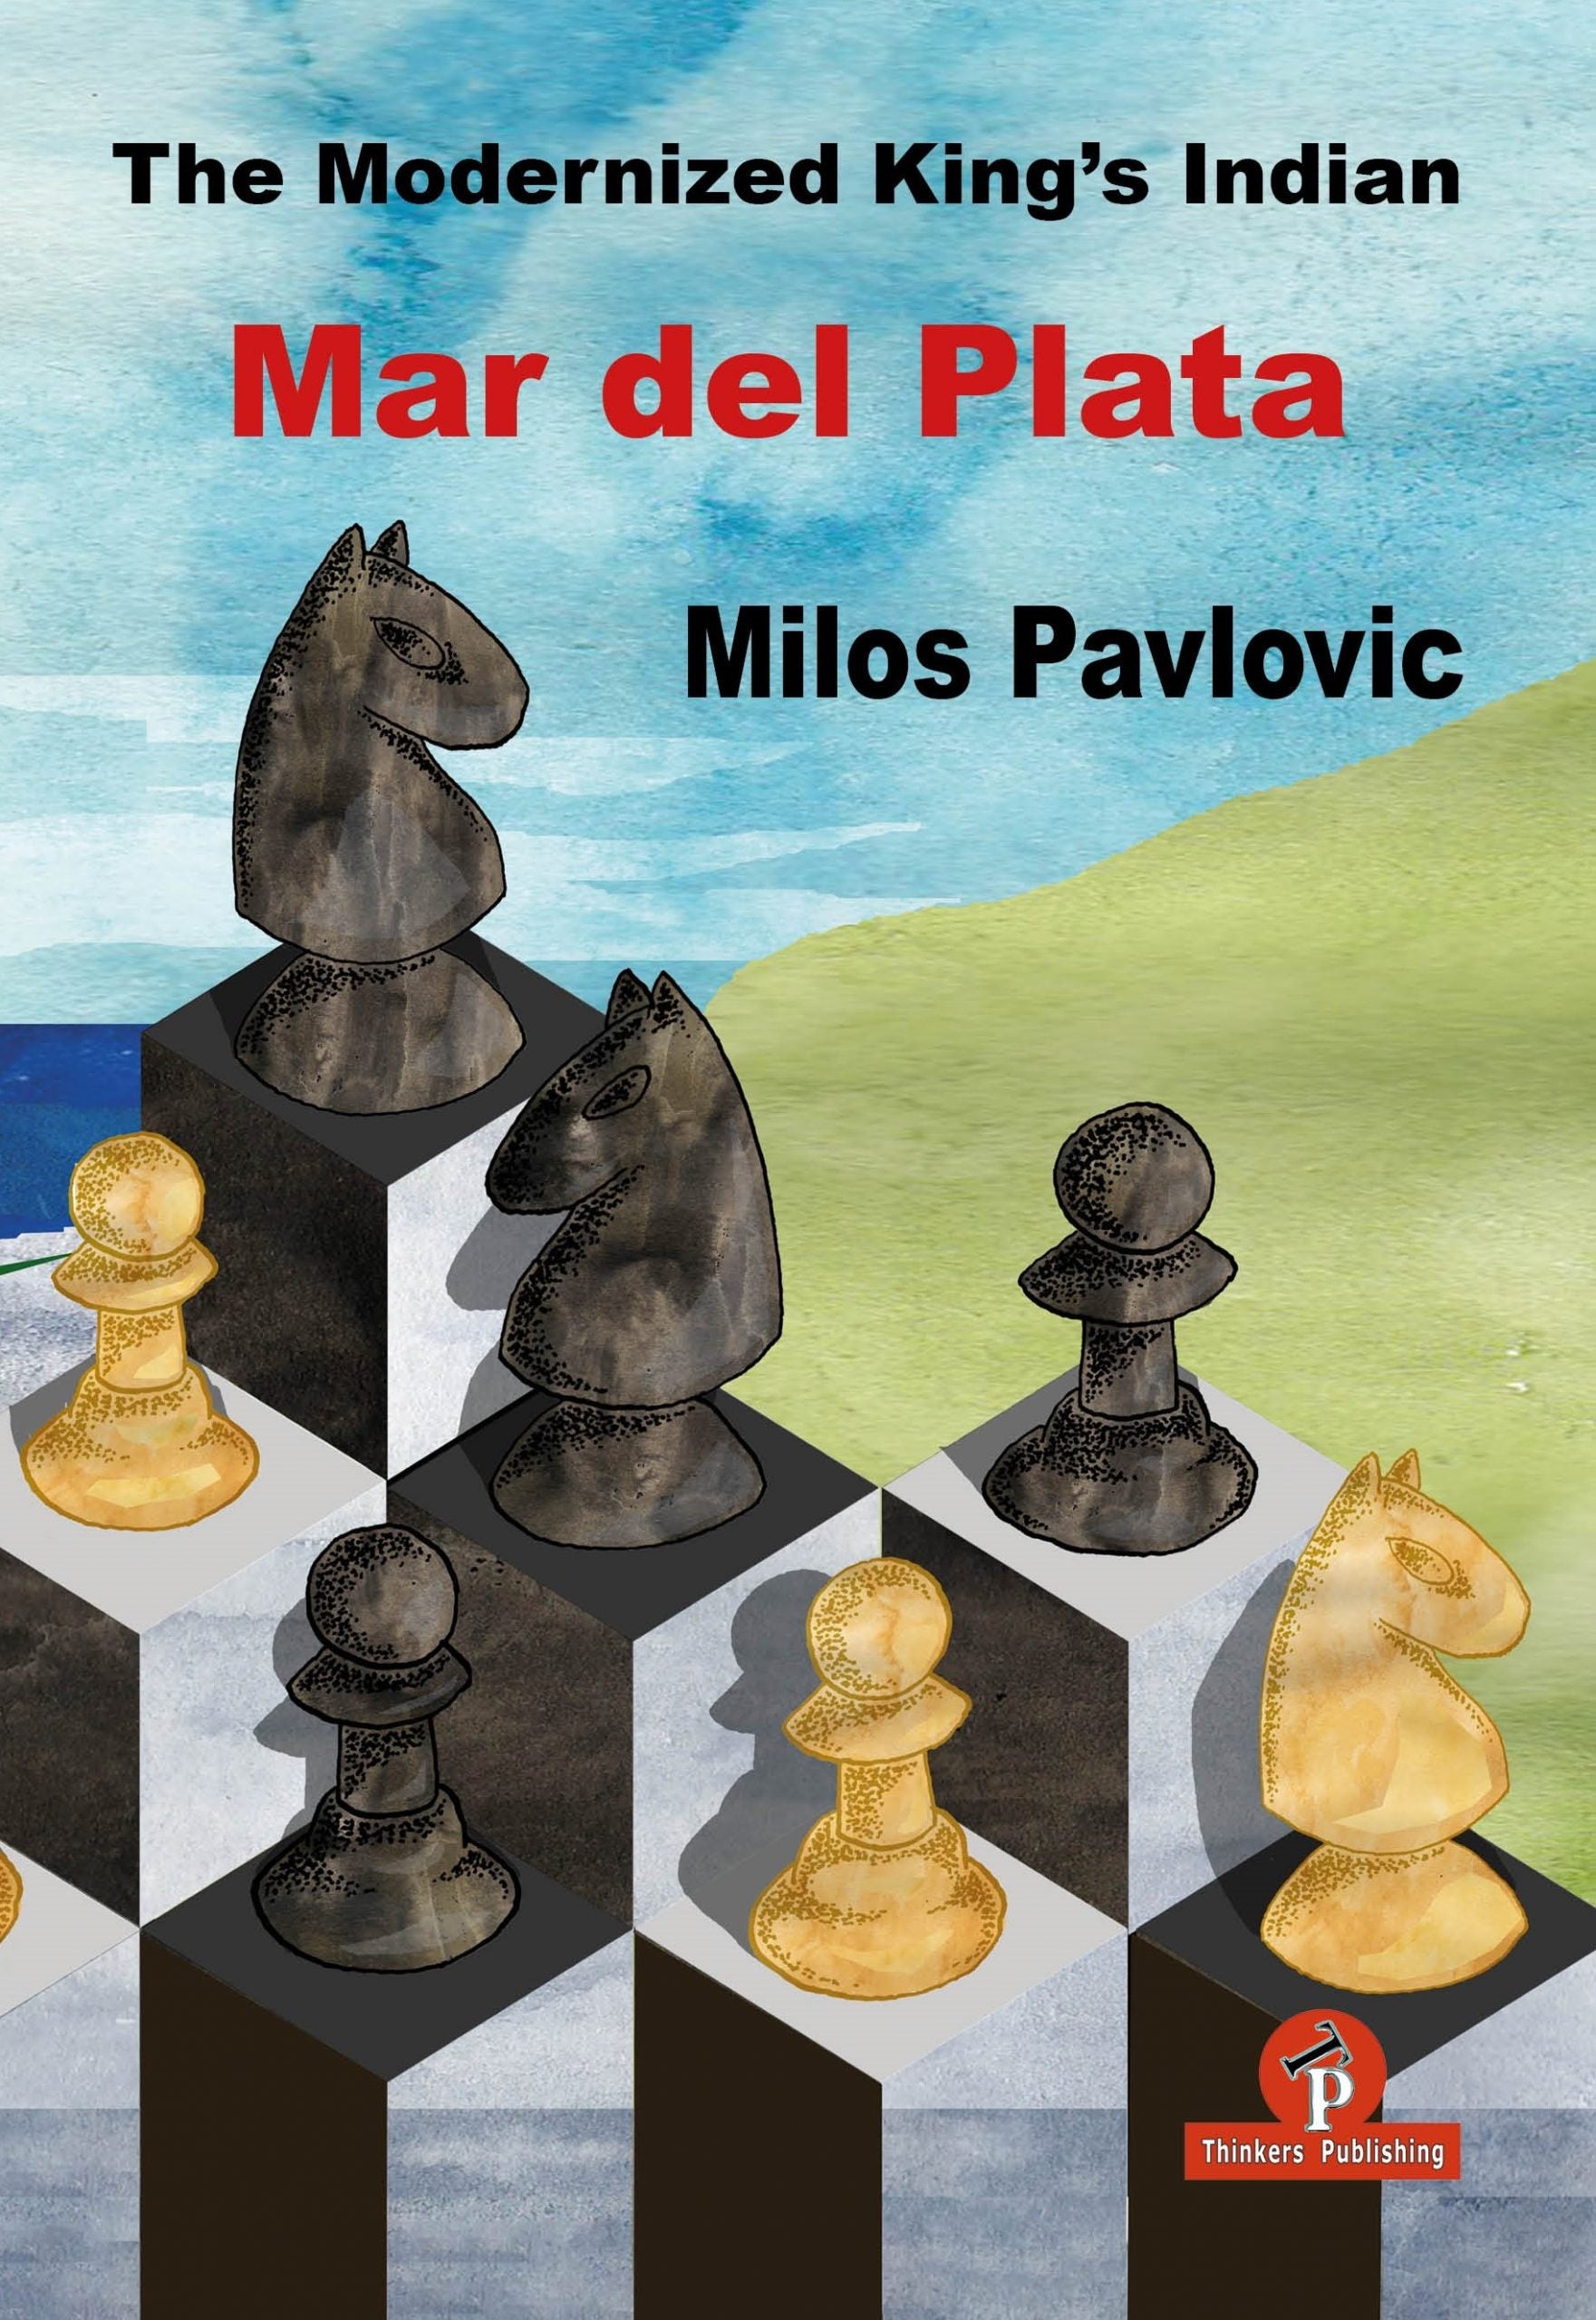 Pavlovic: The modernized King's Indian Defense - Mar del Plata